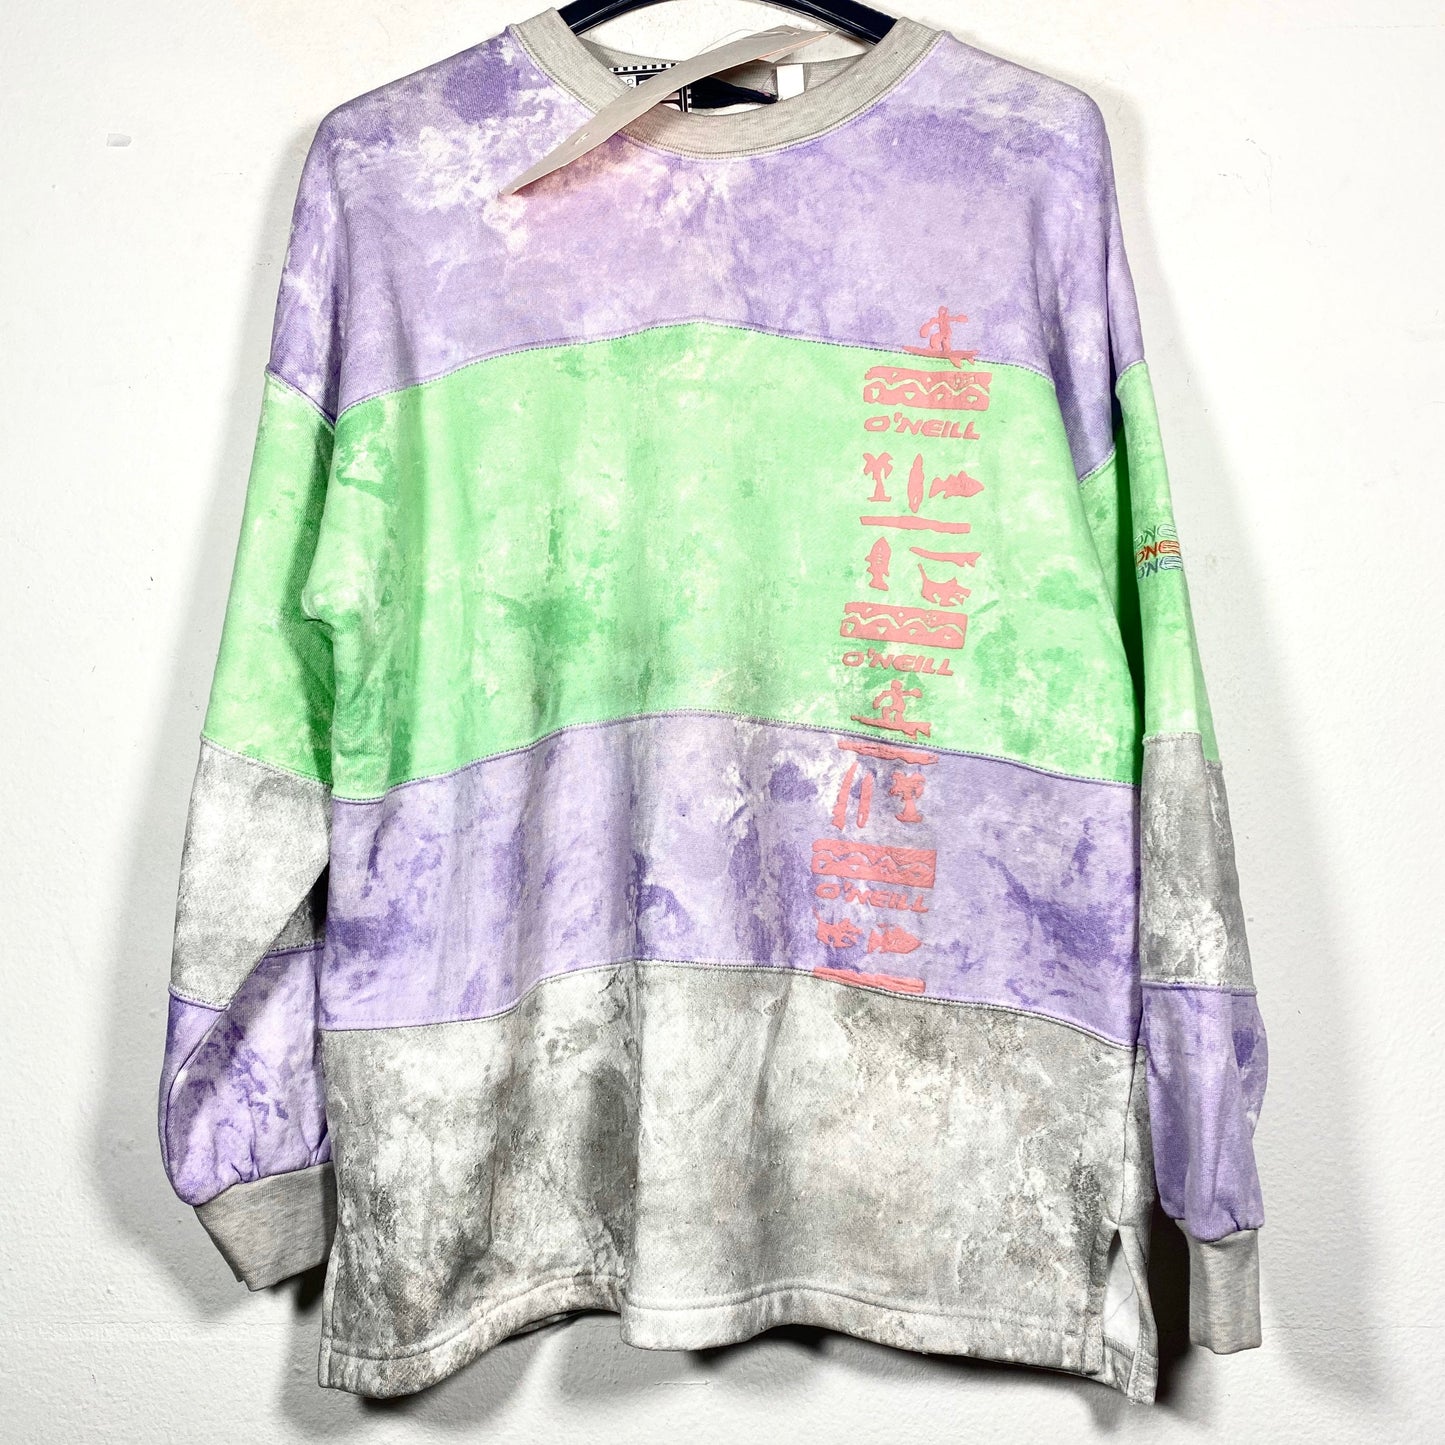 O’Neill 90s NWT tie dye surf/grunge style grey/purple/green sweatshirt, new with tags